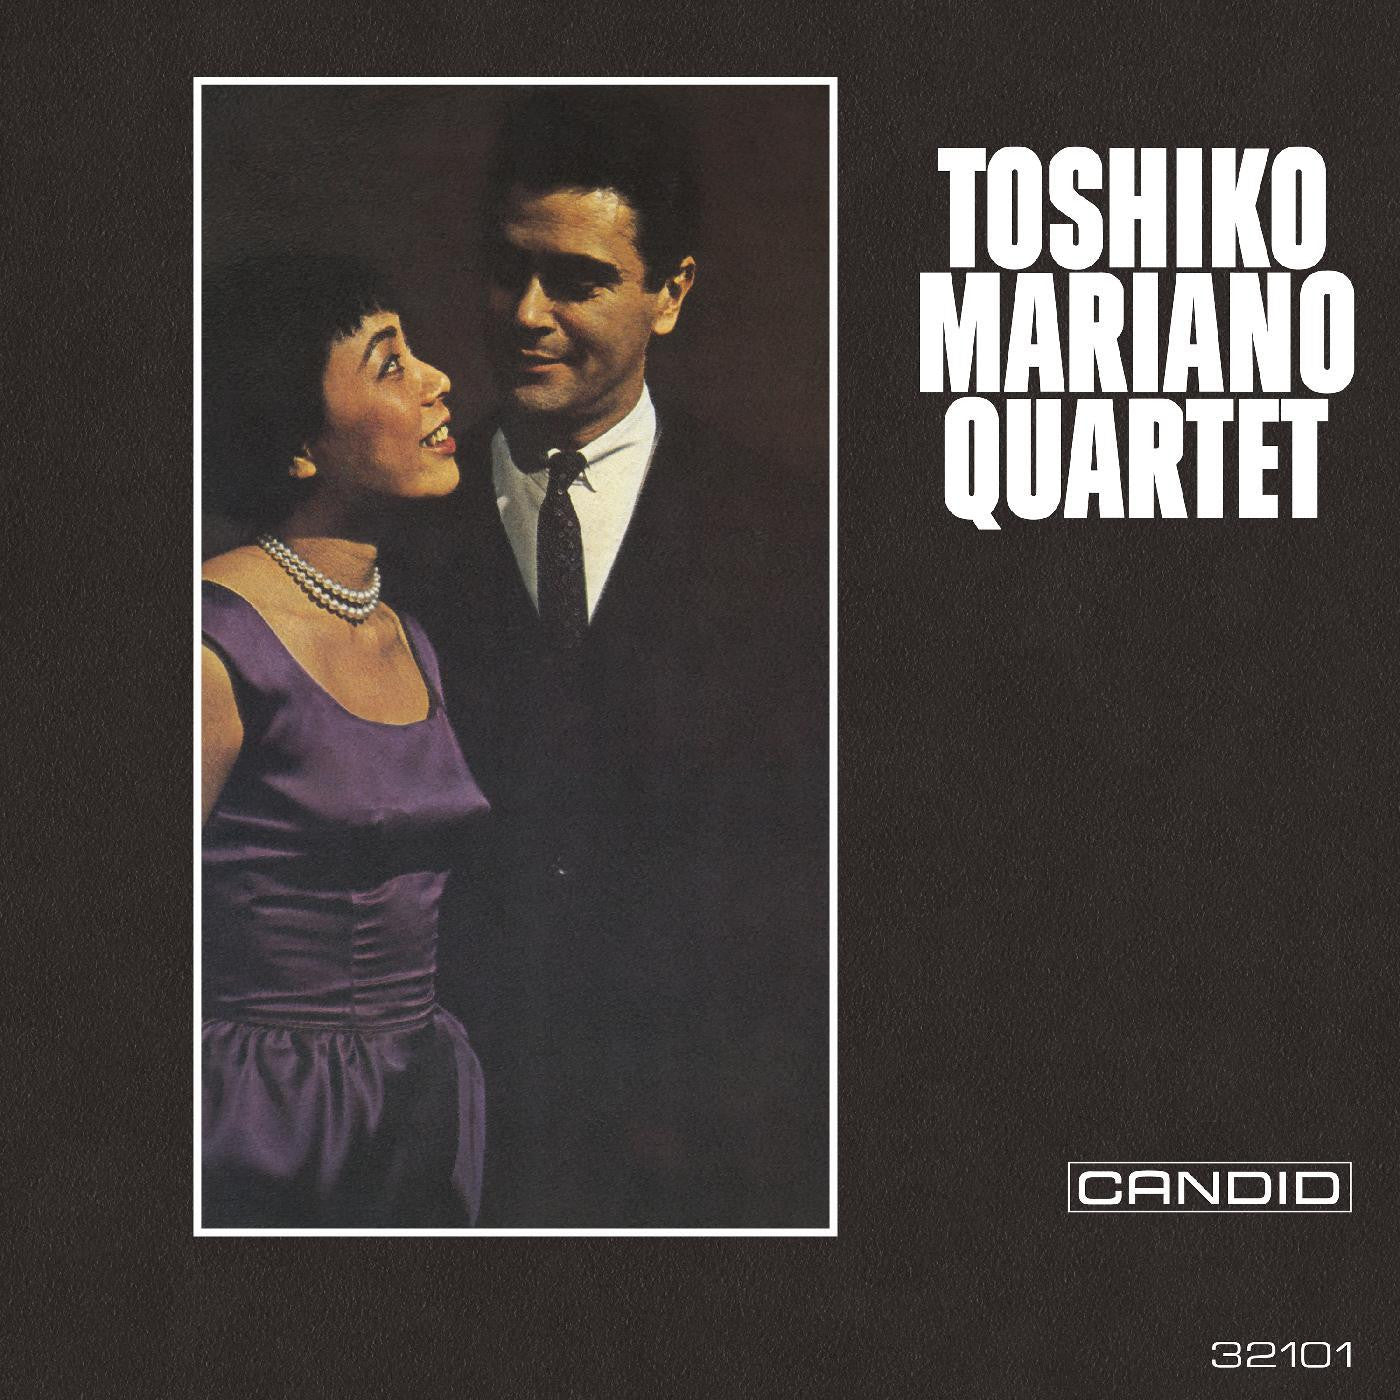 Toshiko Mariano - Toshiko Mariano Quartet (Remastered)